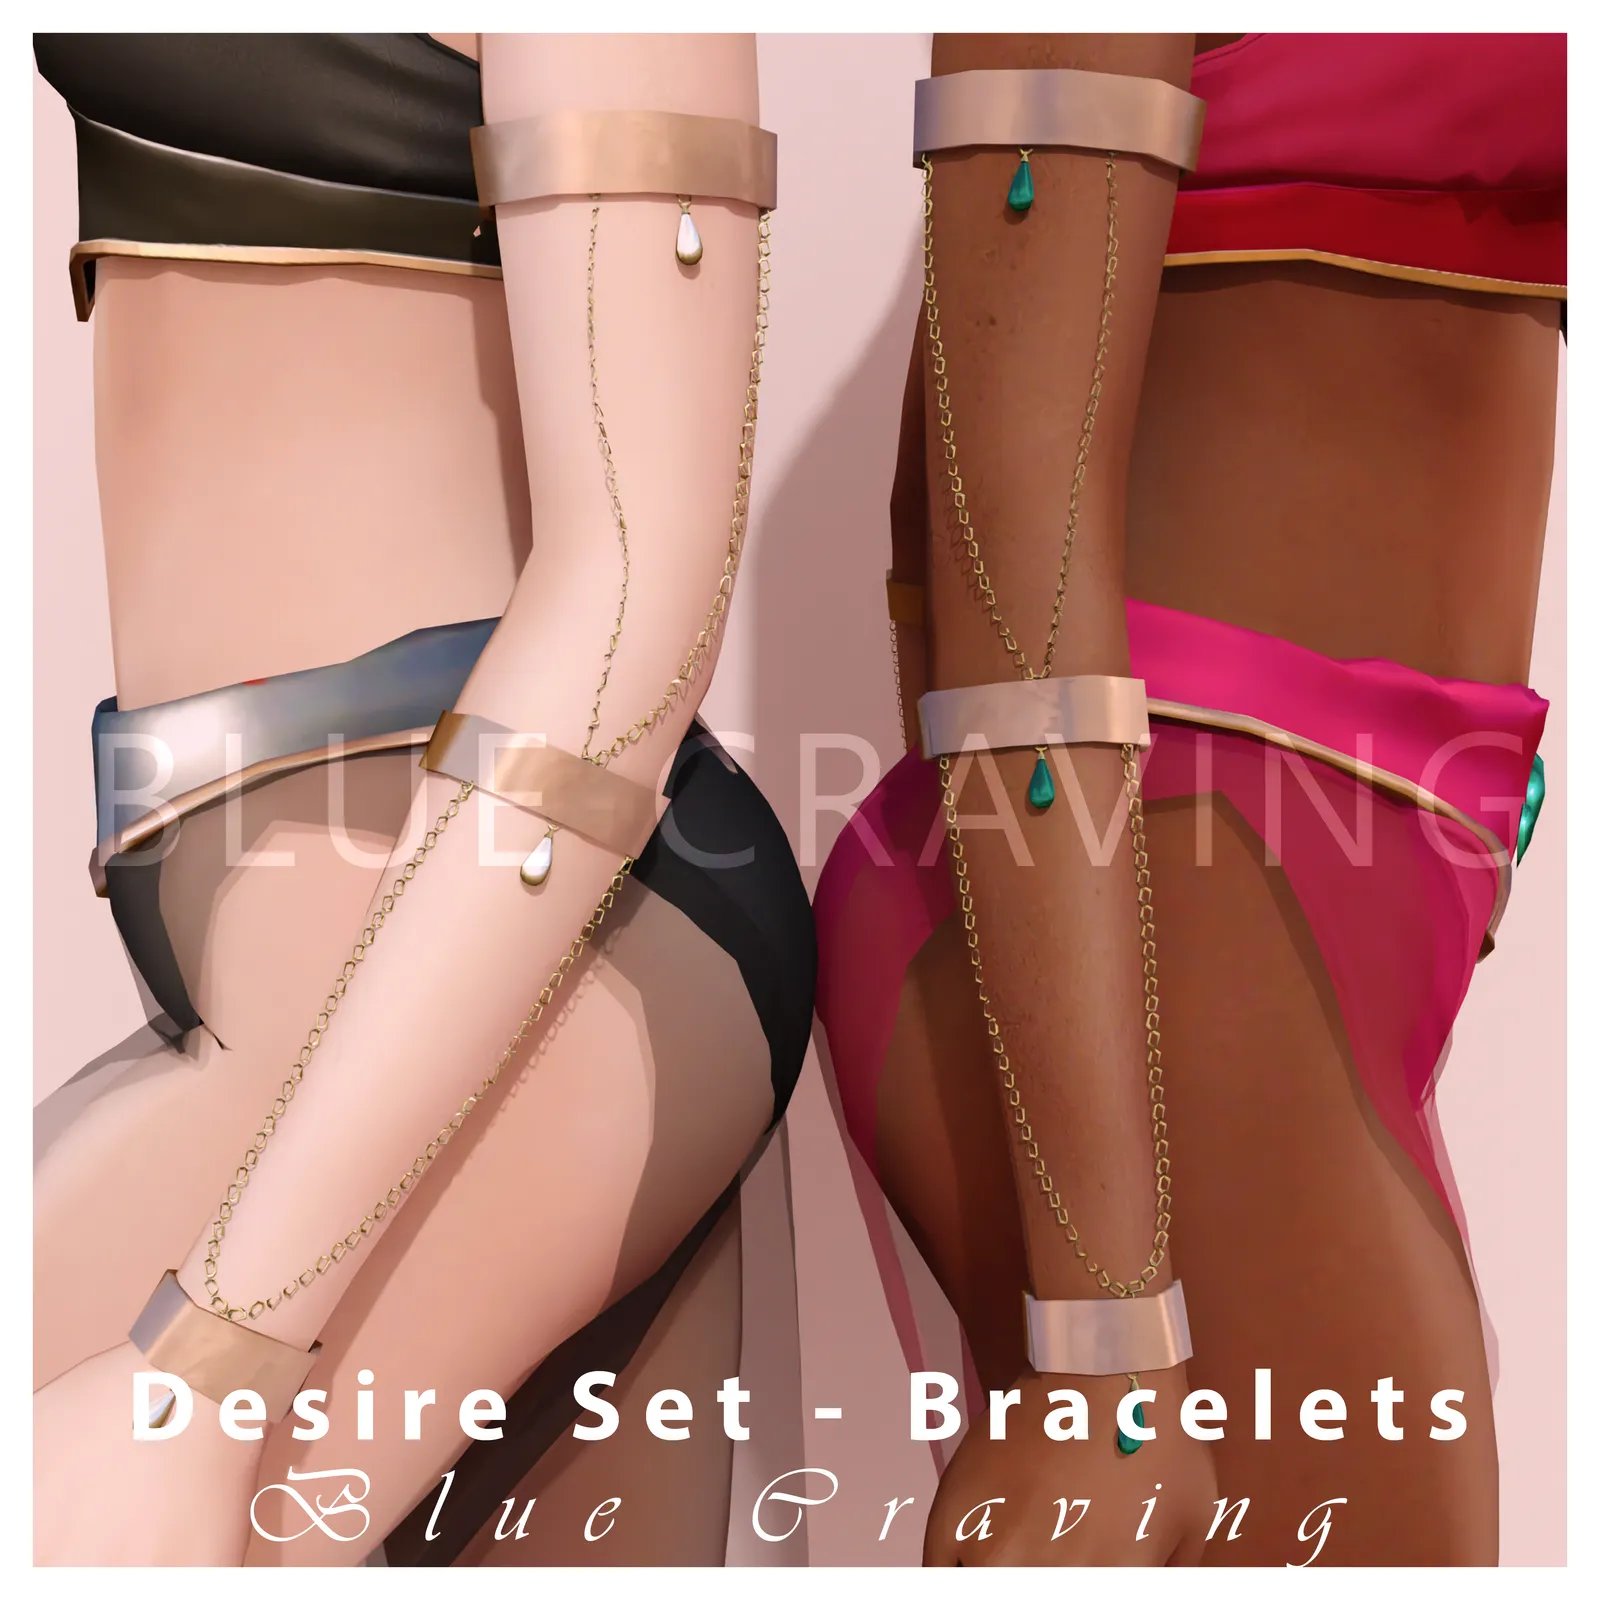 Desire Set - Bracelets